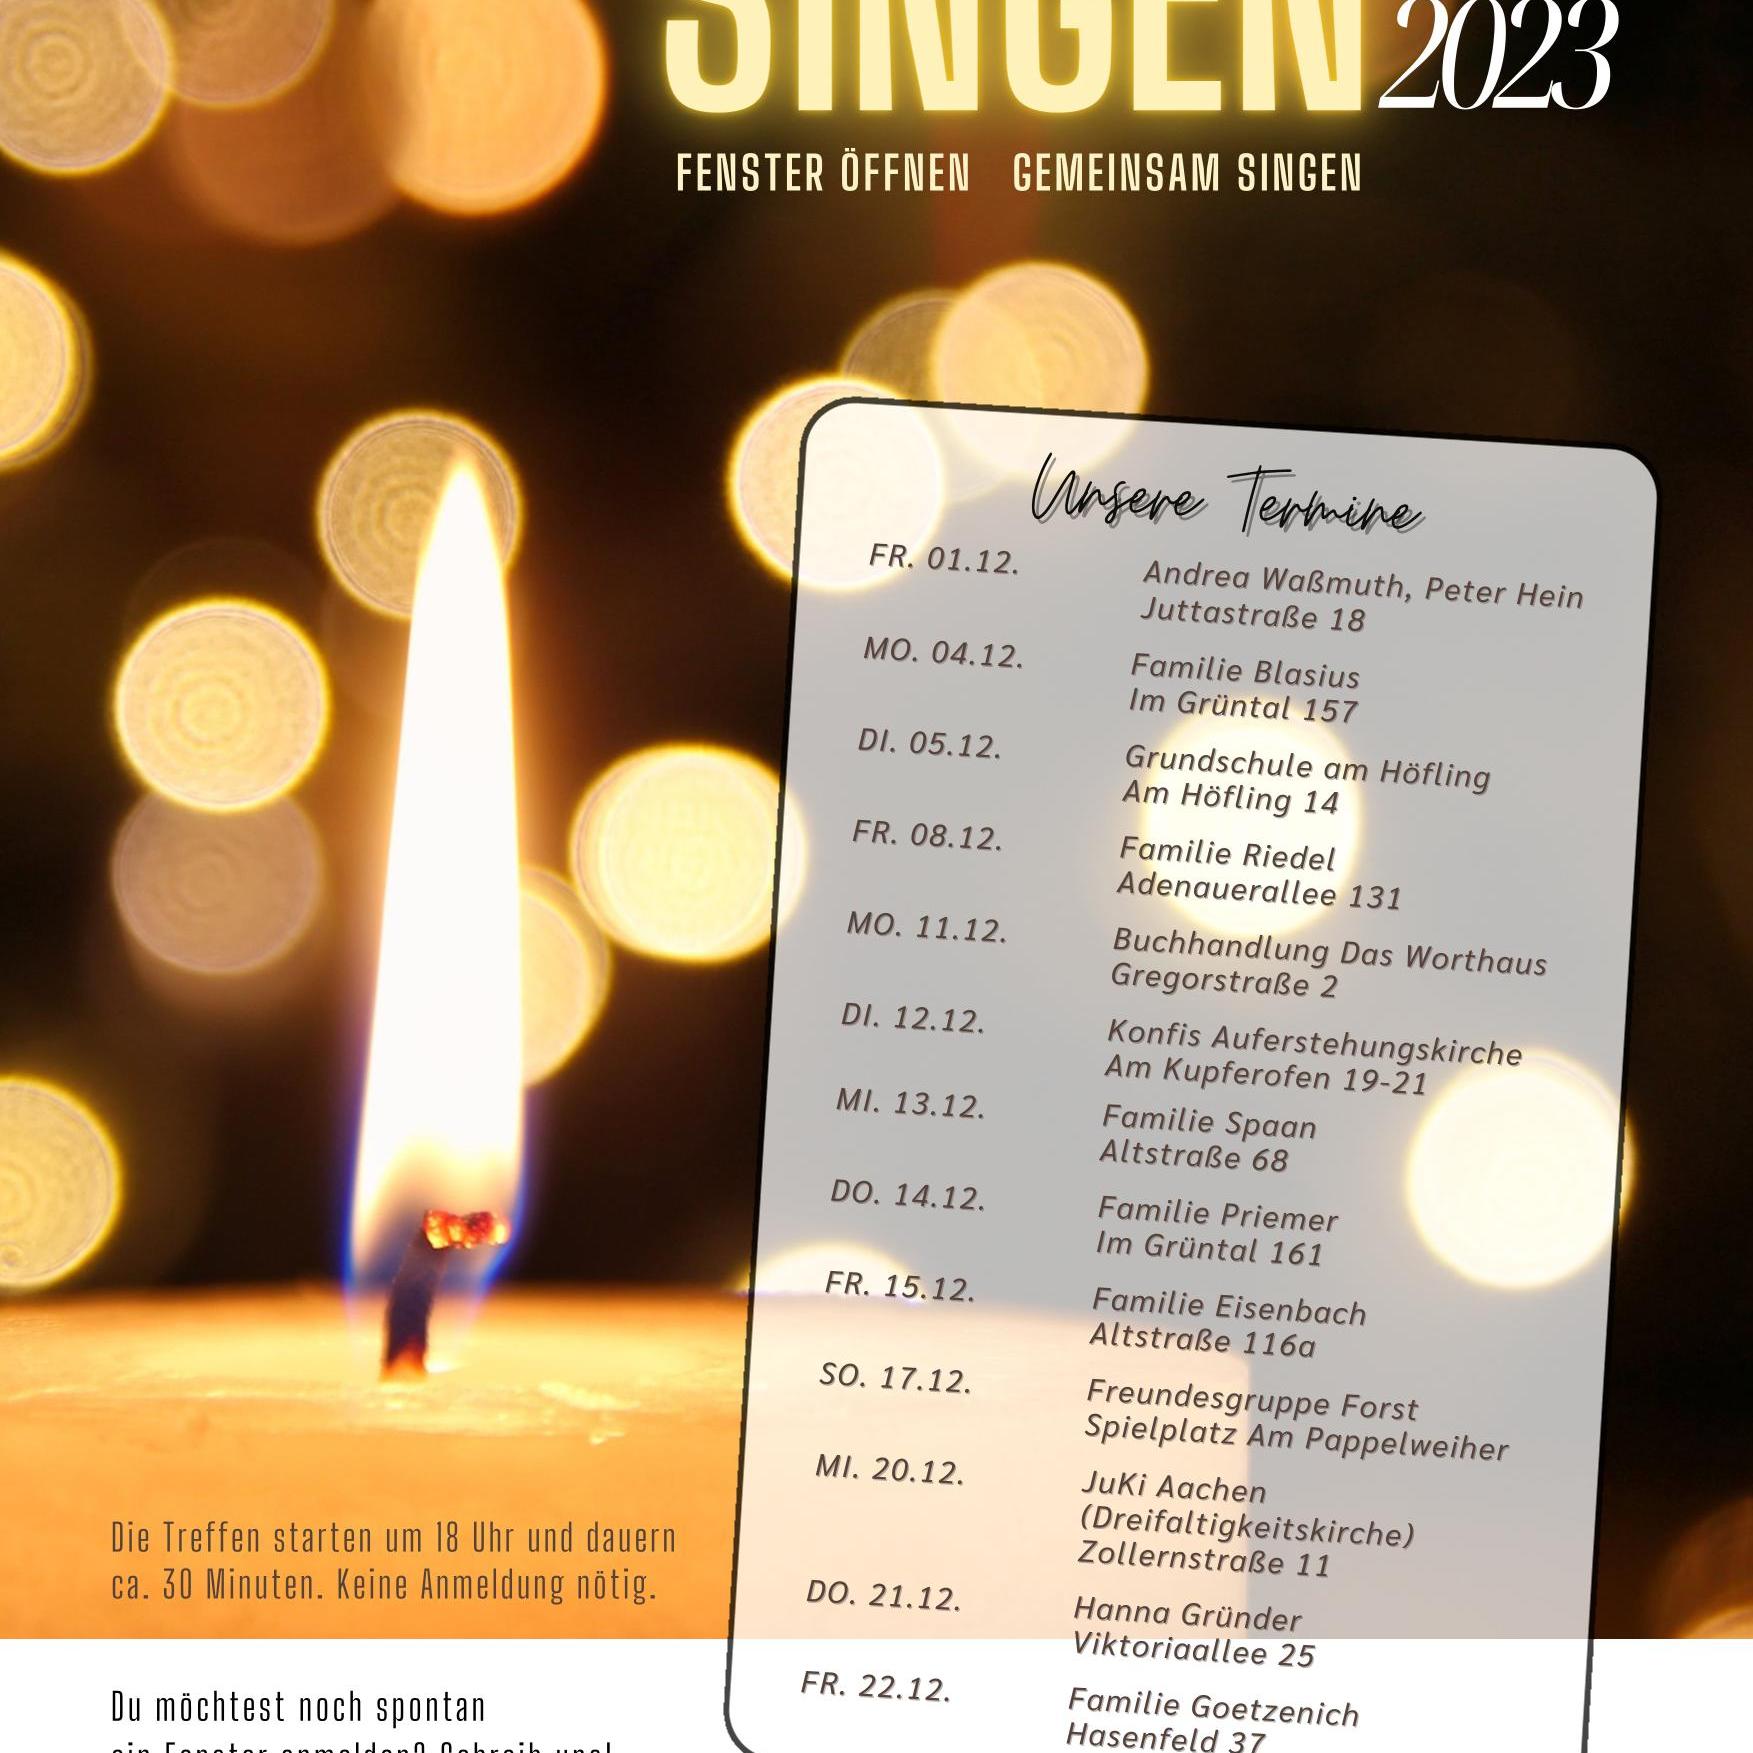 Adventsfenstersingen-2023-Plakat-WEB